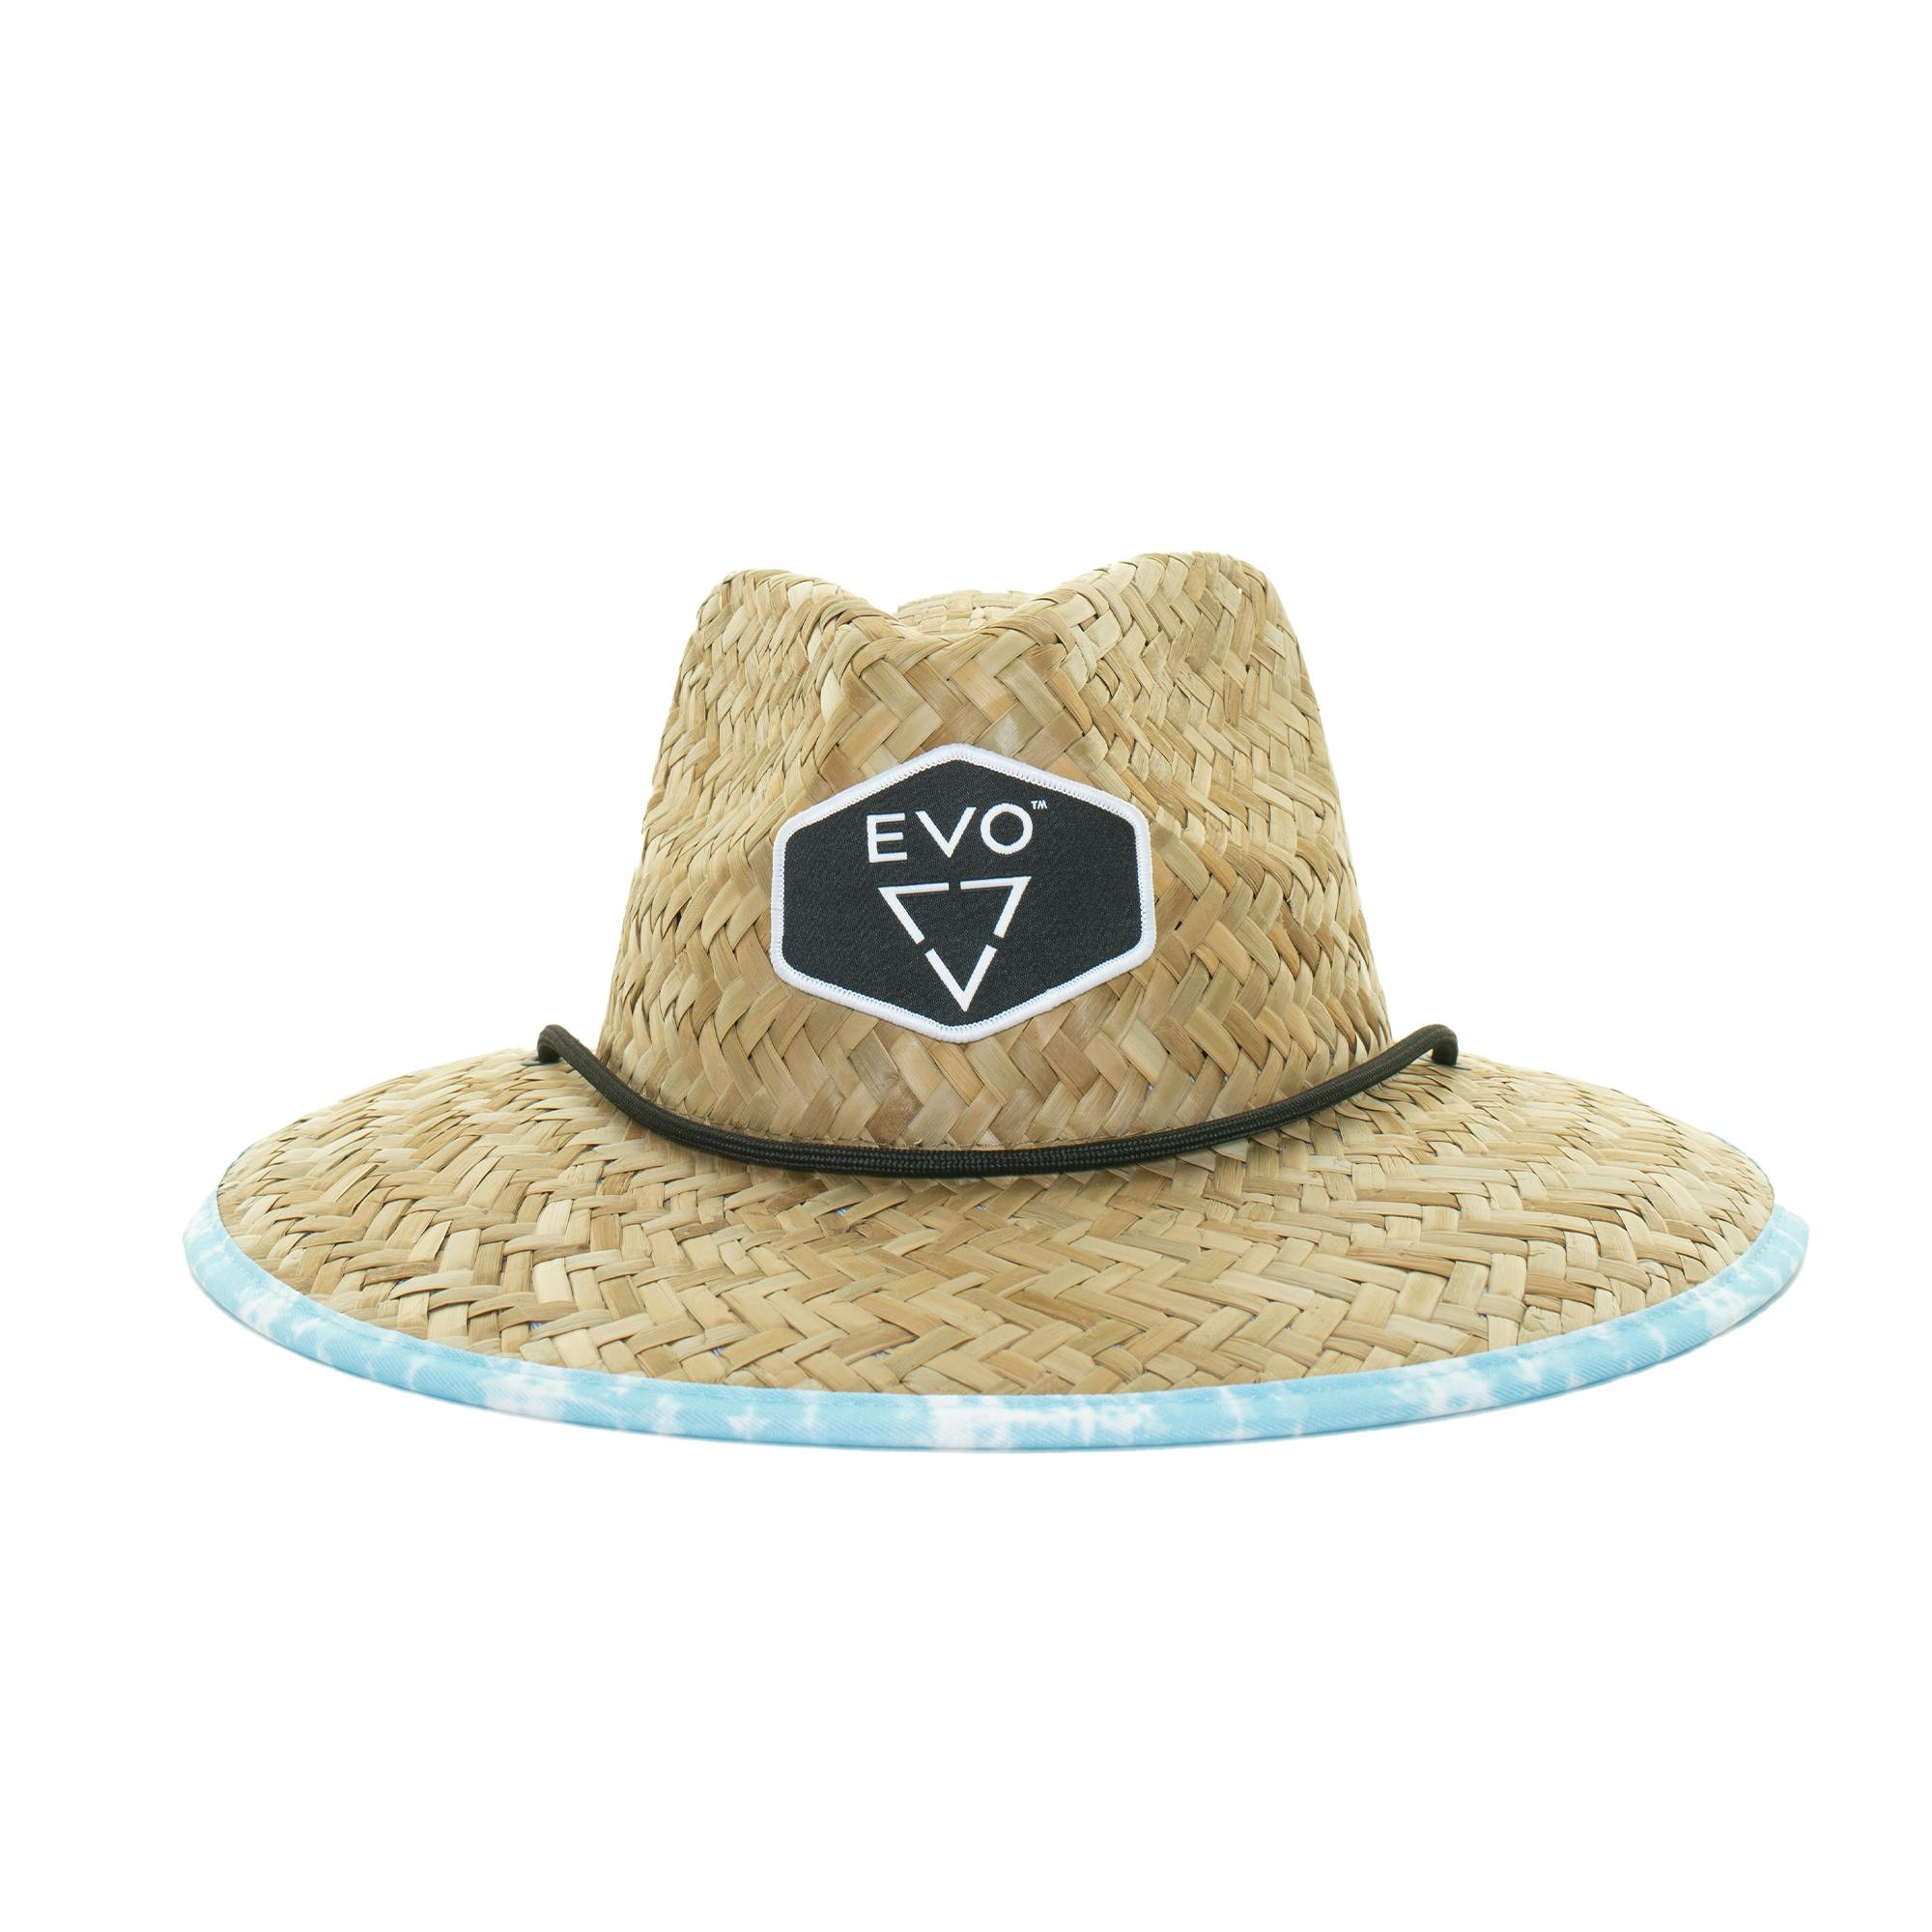 EVO Straw Lifeguard Hat - Rize Light Blue - Keys (Women's) Front View